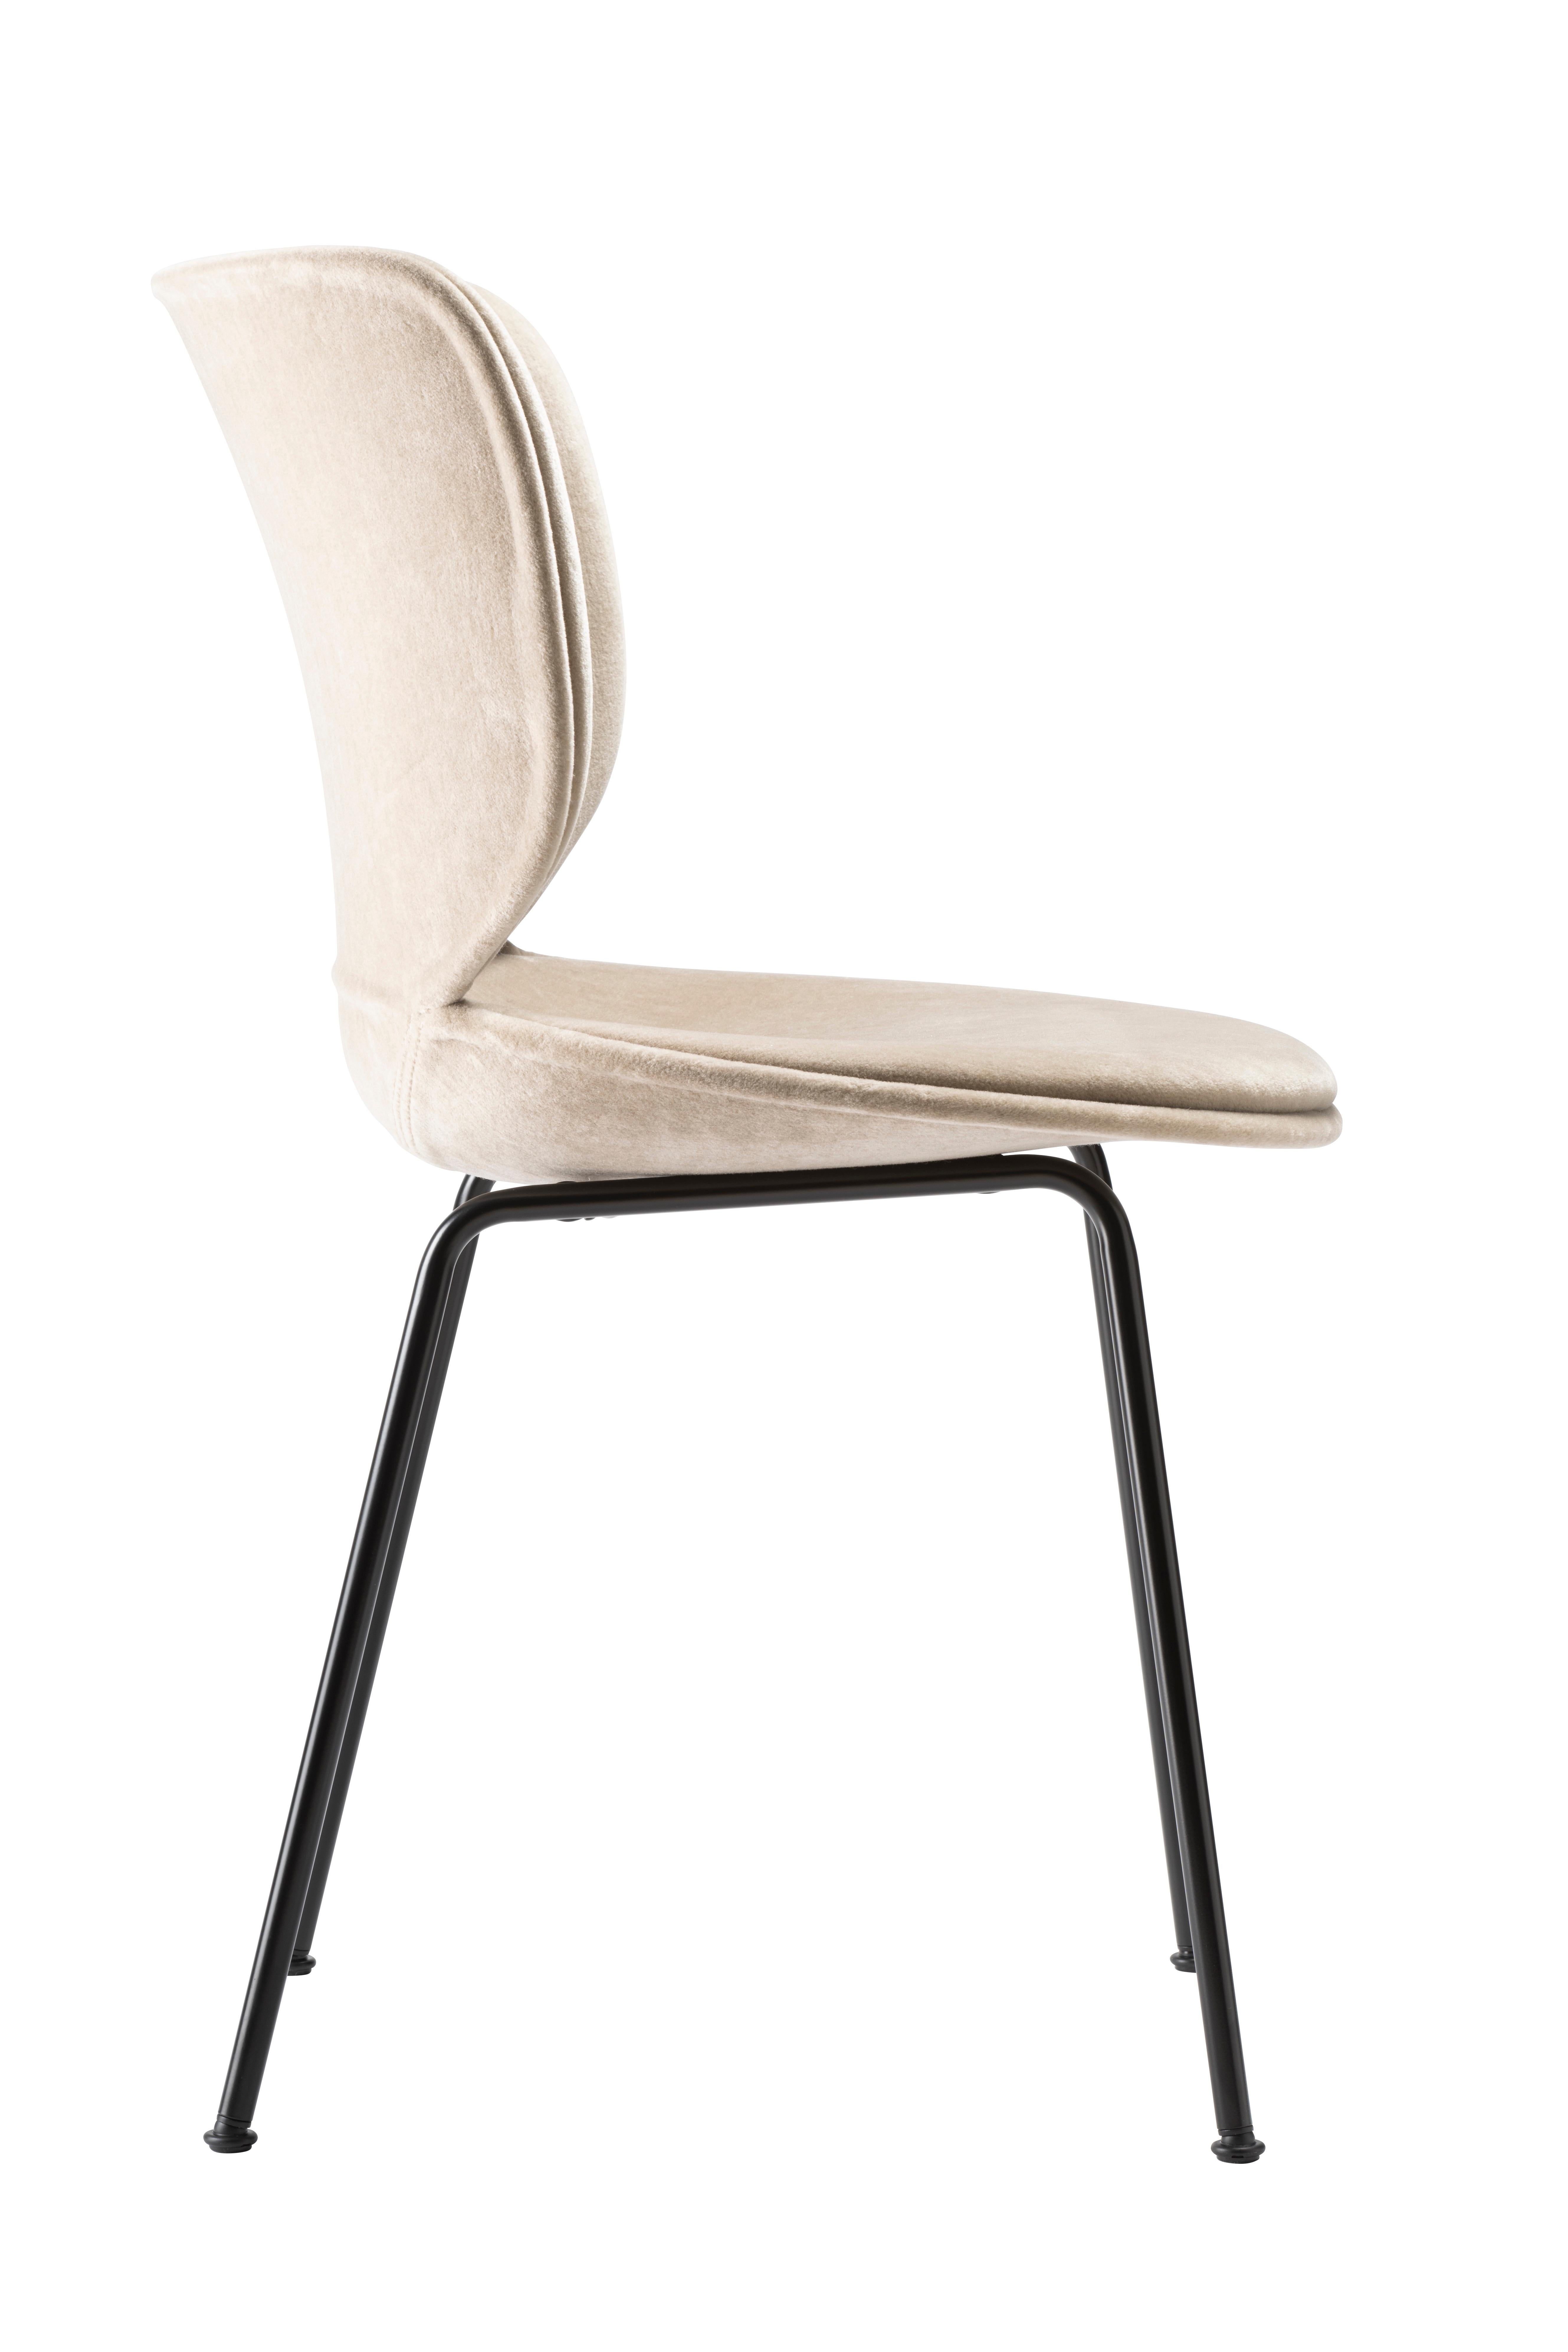 Contemporary Moooi set of 2 Hana Chair by Simone Bonanni For Sale